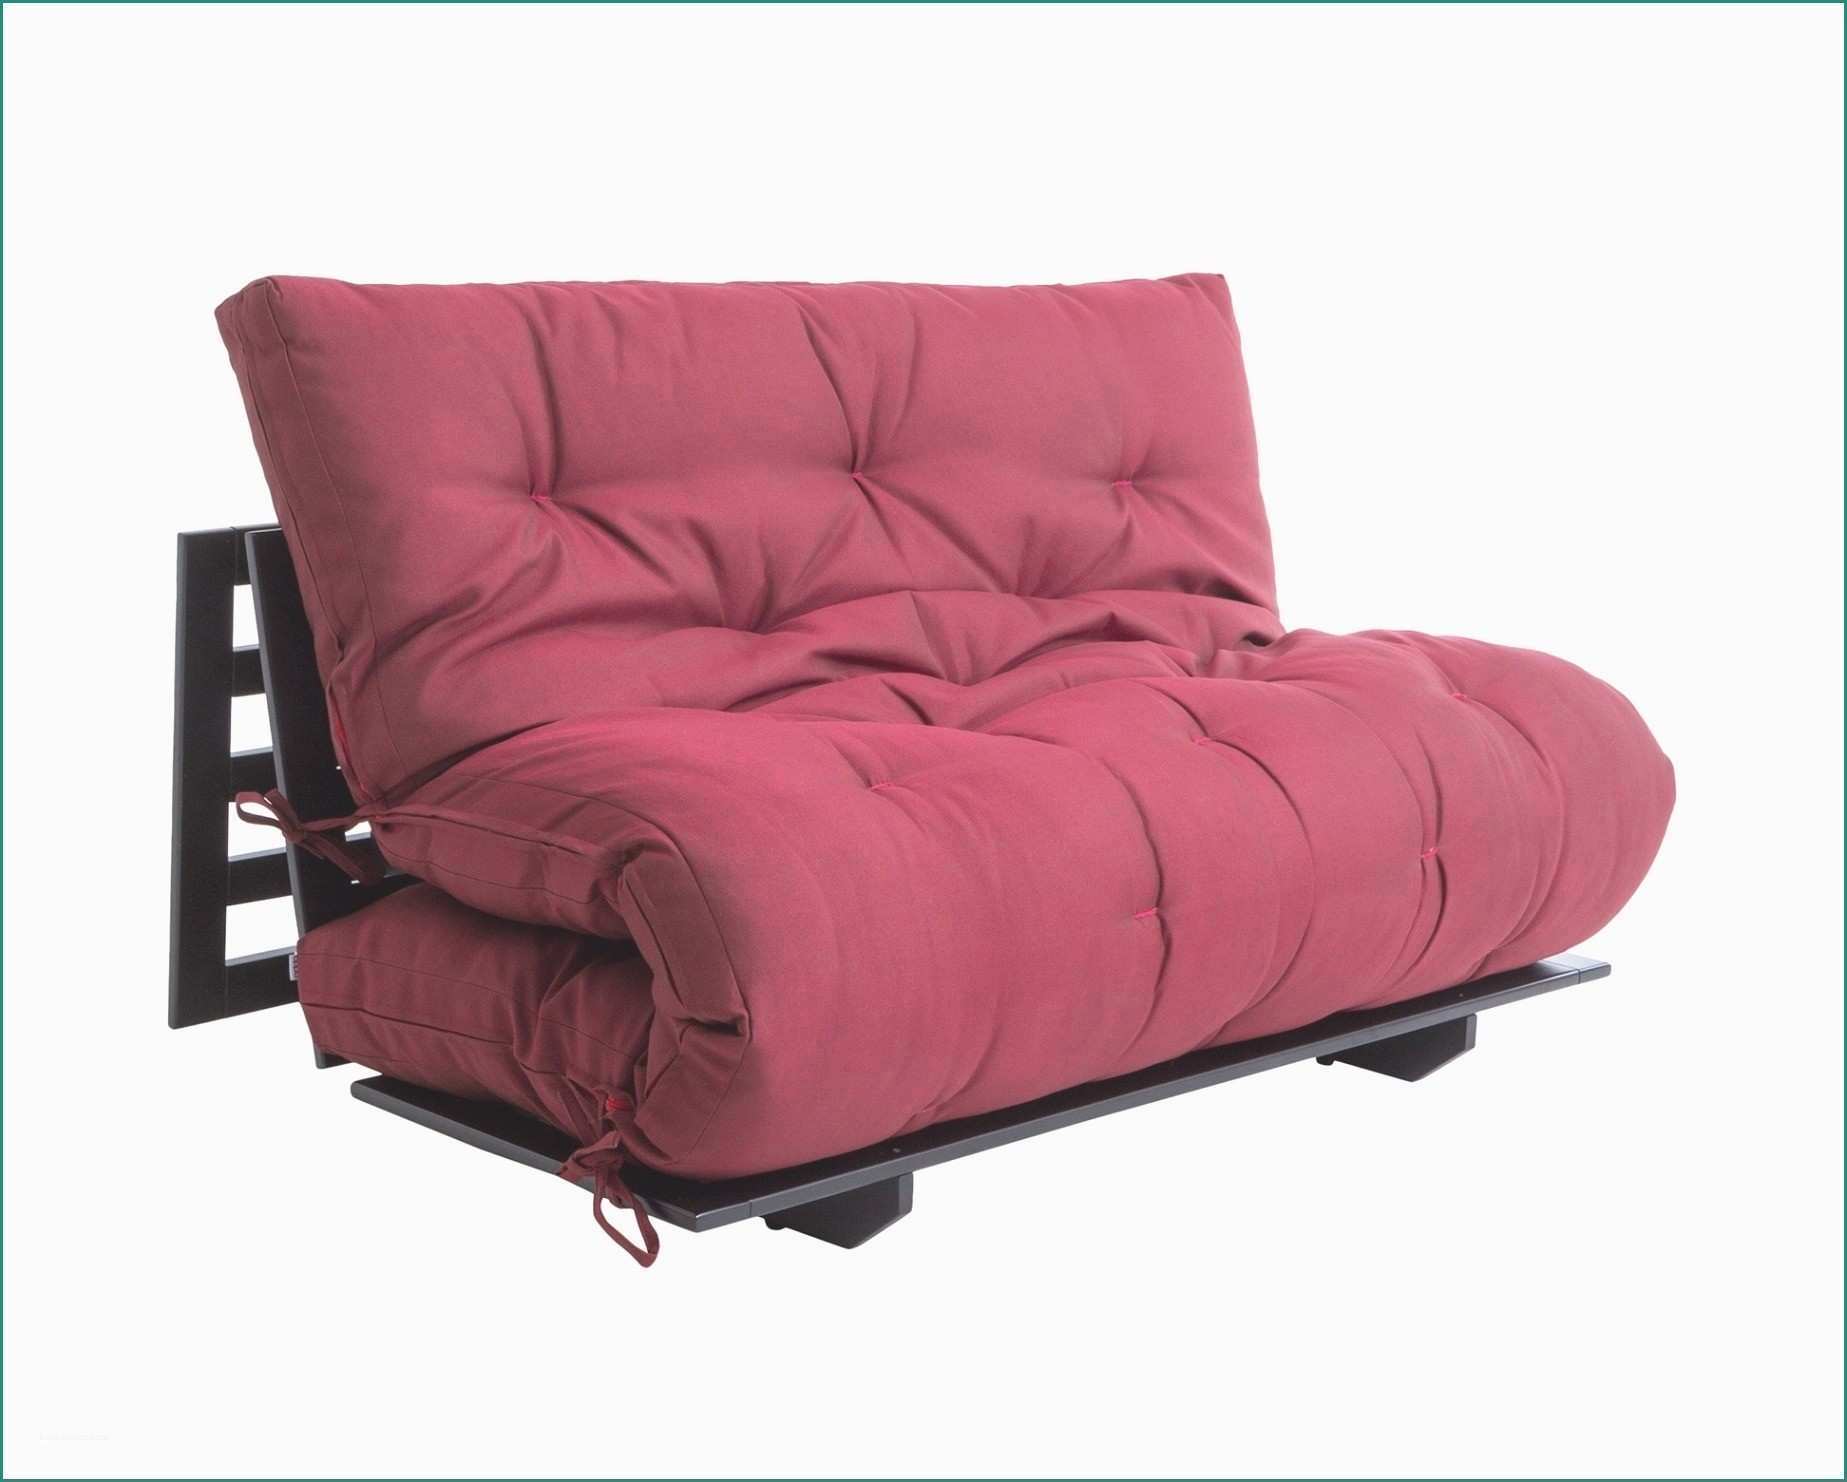 Chaise Longue Divano E sofas Cama Con Chaise Longue Impresionante 35 Elegant sofa